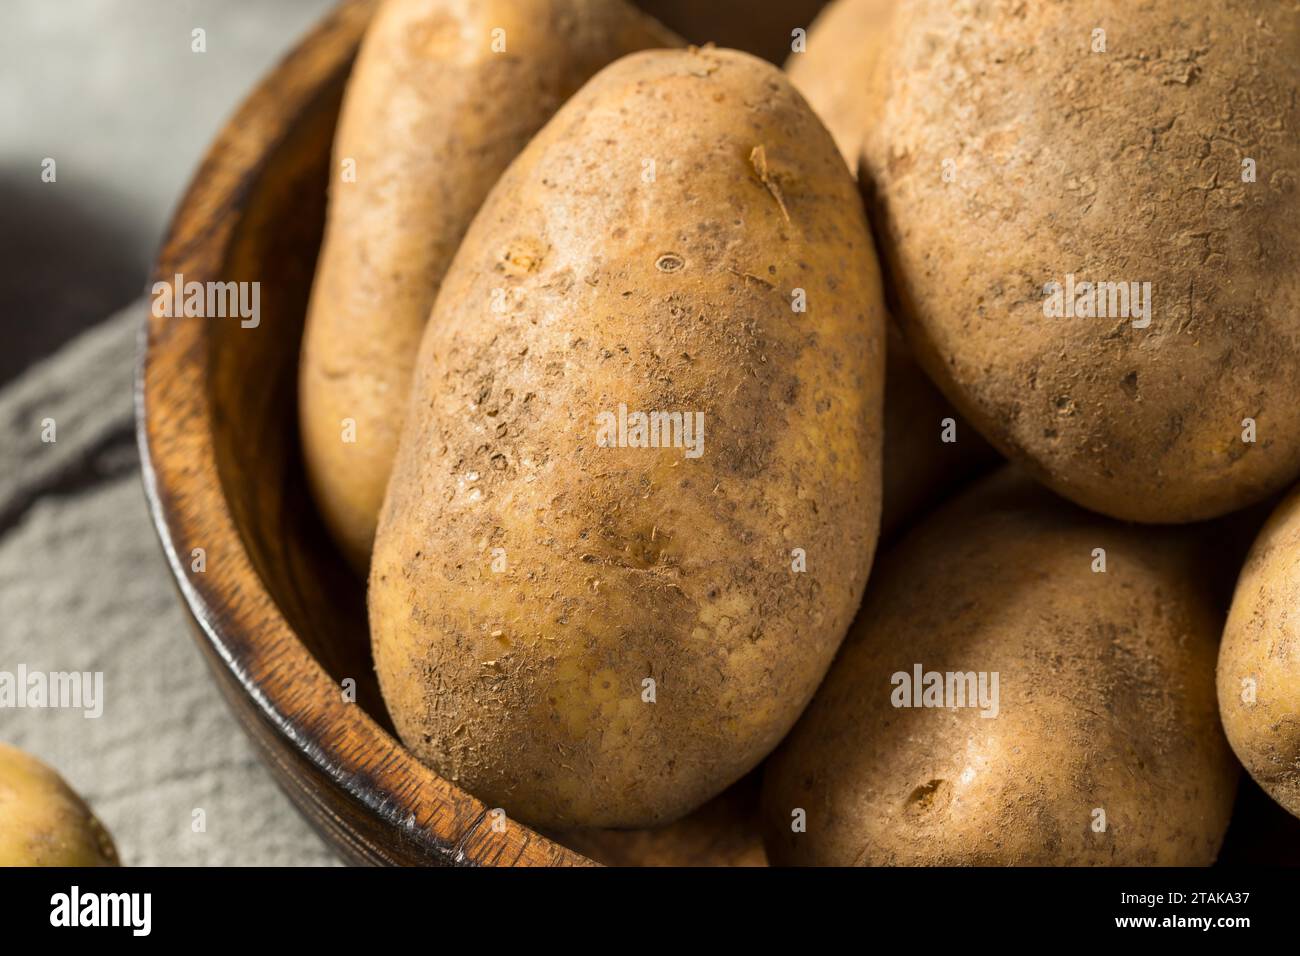 Pommes de terre Russet Idaho bio crues dans un bol Banque D'Images